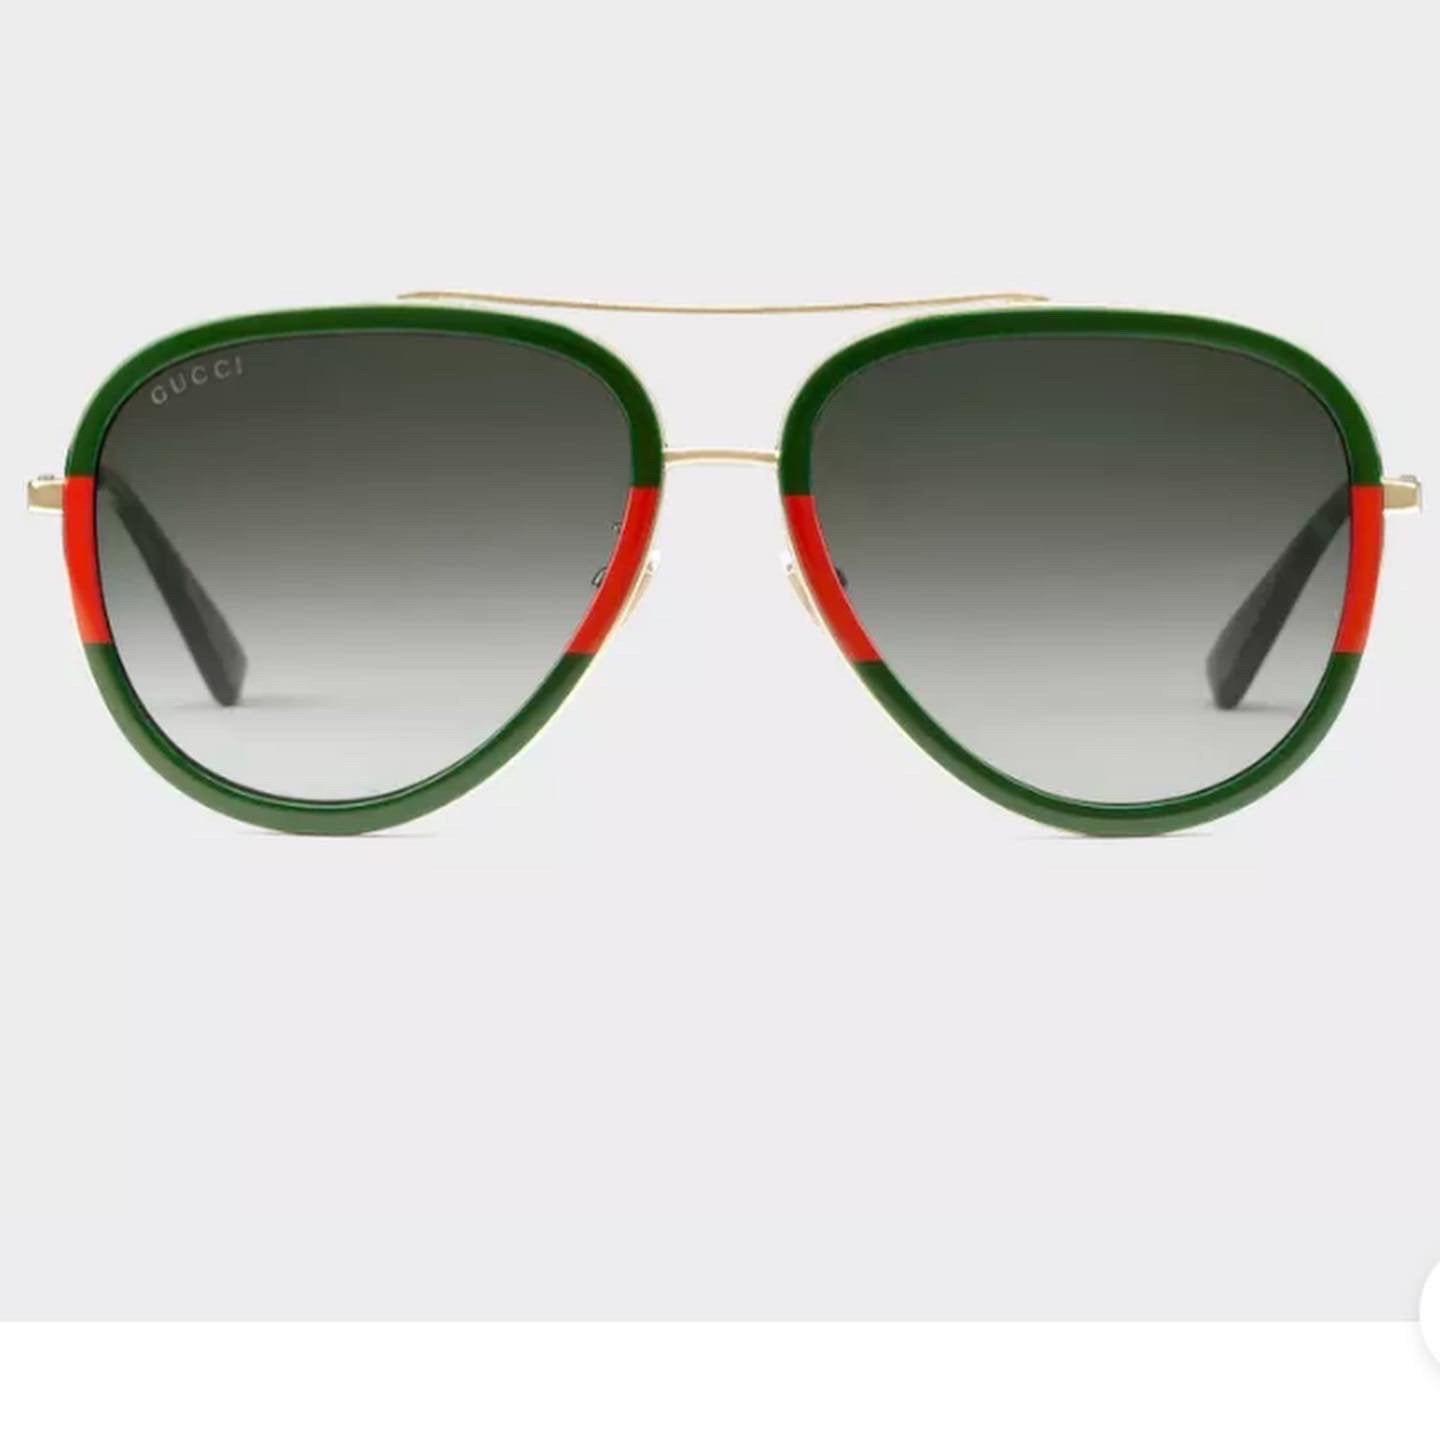 Gucci Gradient Web Aviator Sunglasses w/ Leather Trim, Gold/Green/Red | Aviator  sunglasses, Luxury brands fashion, Sunglasses